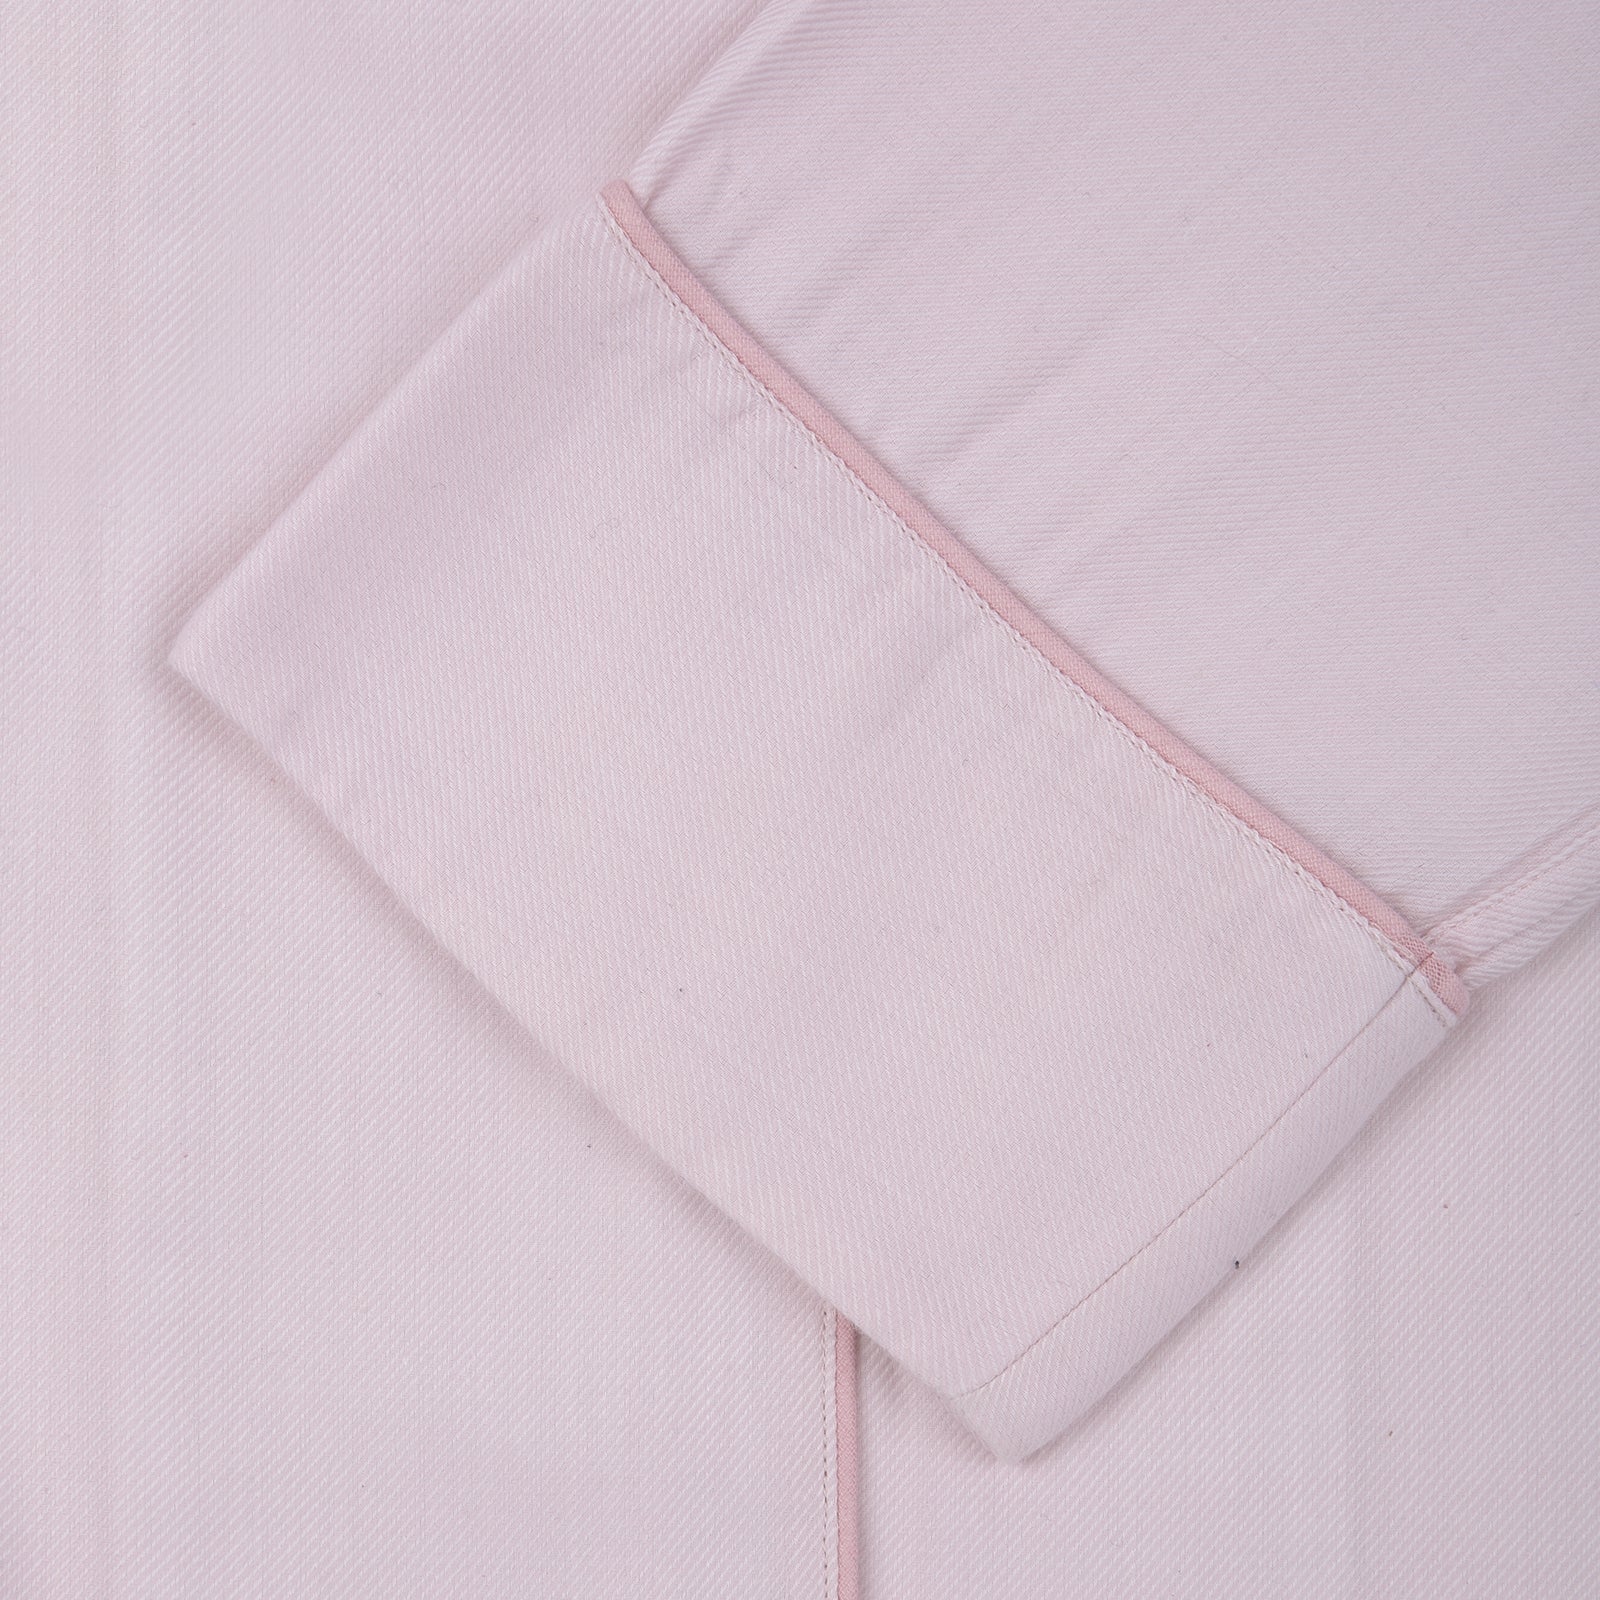 Ladies' Pink Cotton-Cashmere Pyjama Set